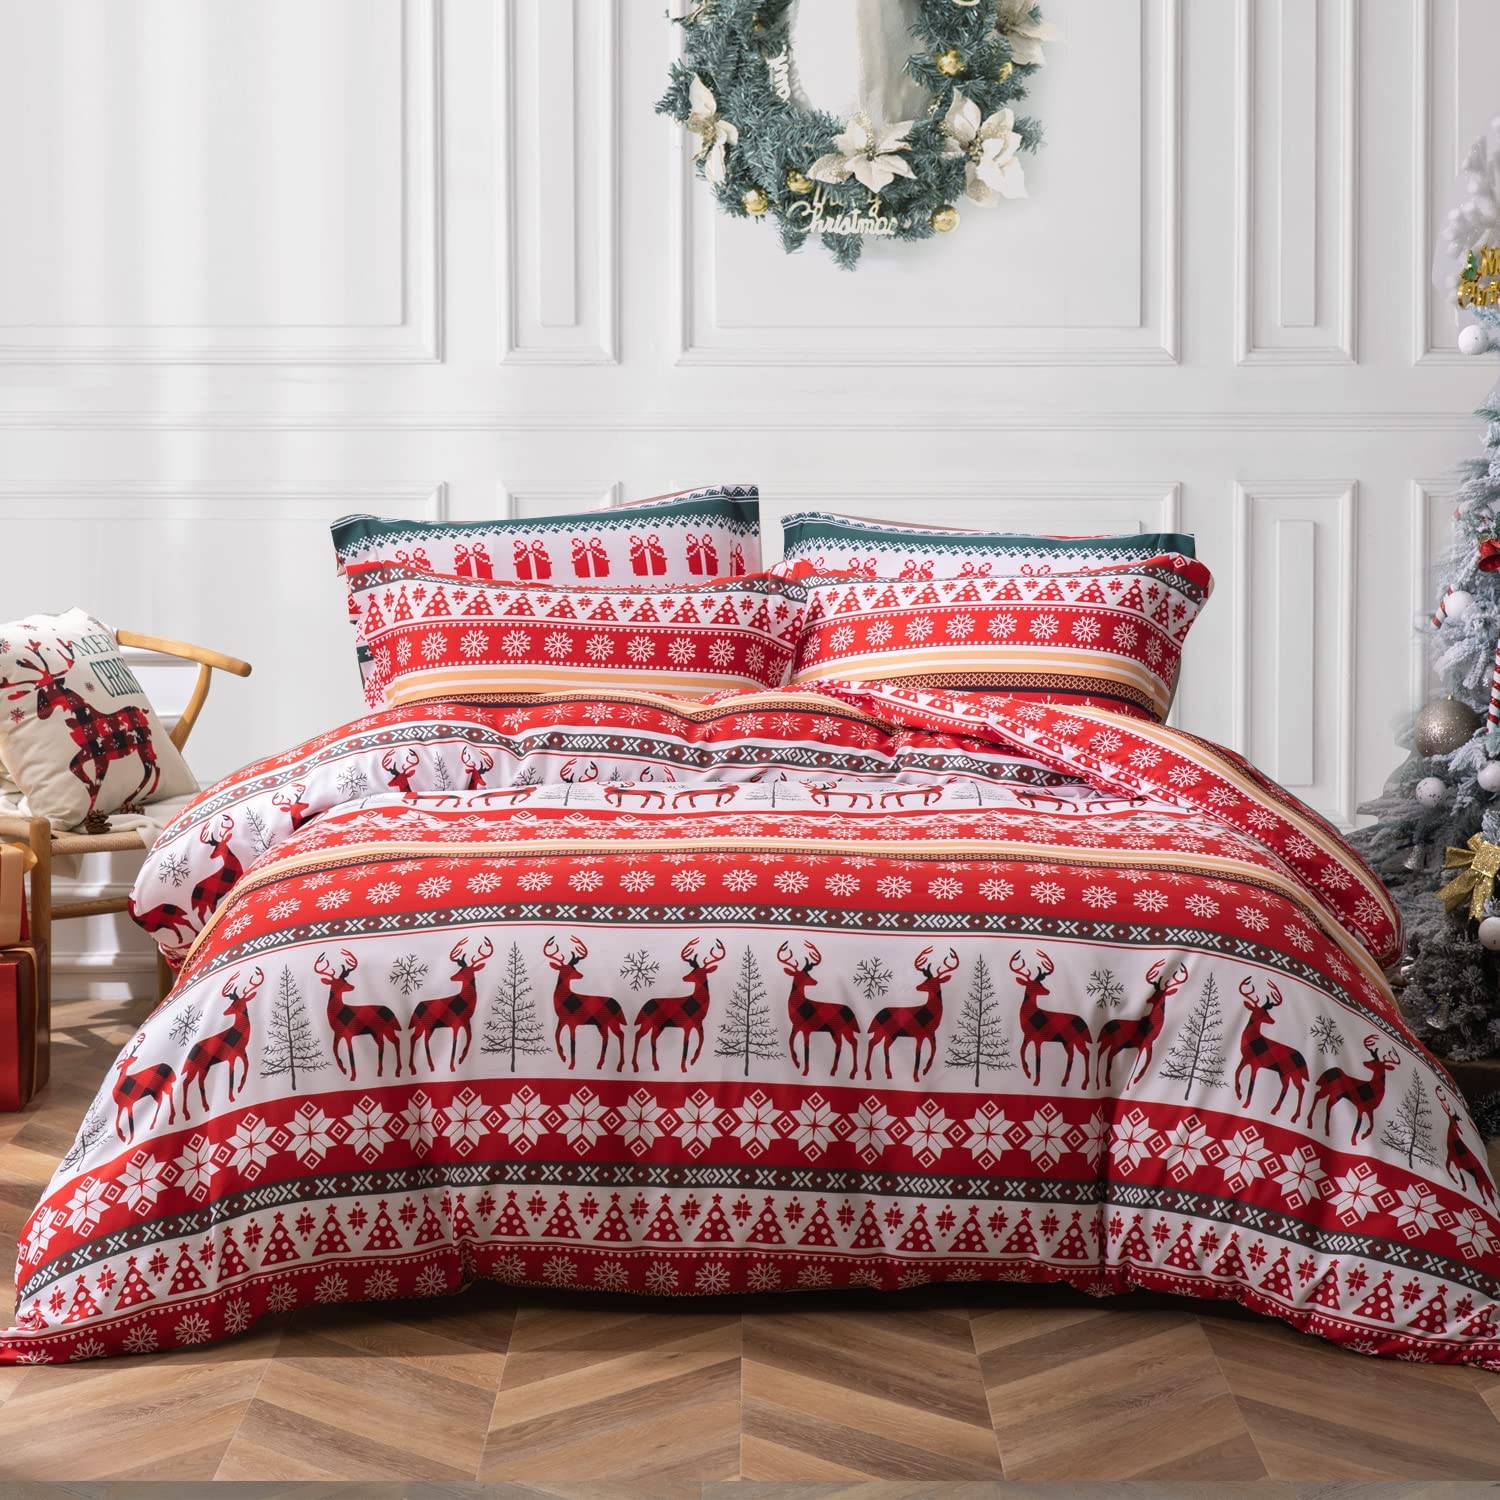 Price:$33.99  Christmas Duvet Cover Set - Snowflake Reindeer Printed Lightweight Soft Microfiber Comforter Cover 3Pcs Boho Bedding Set (No Comforter) Queen, Red : Home & Kitchen